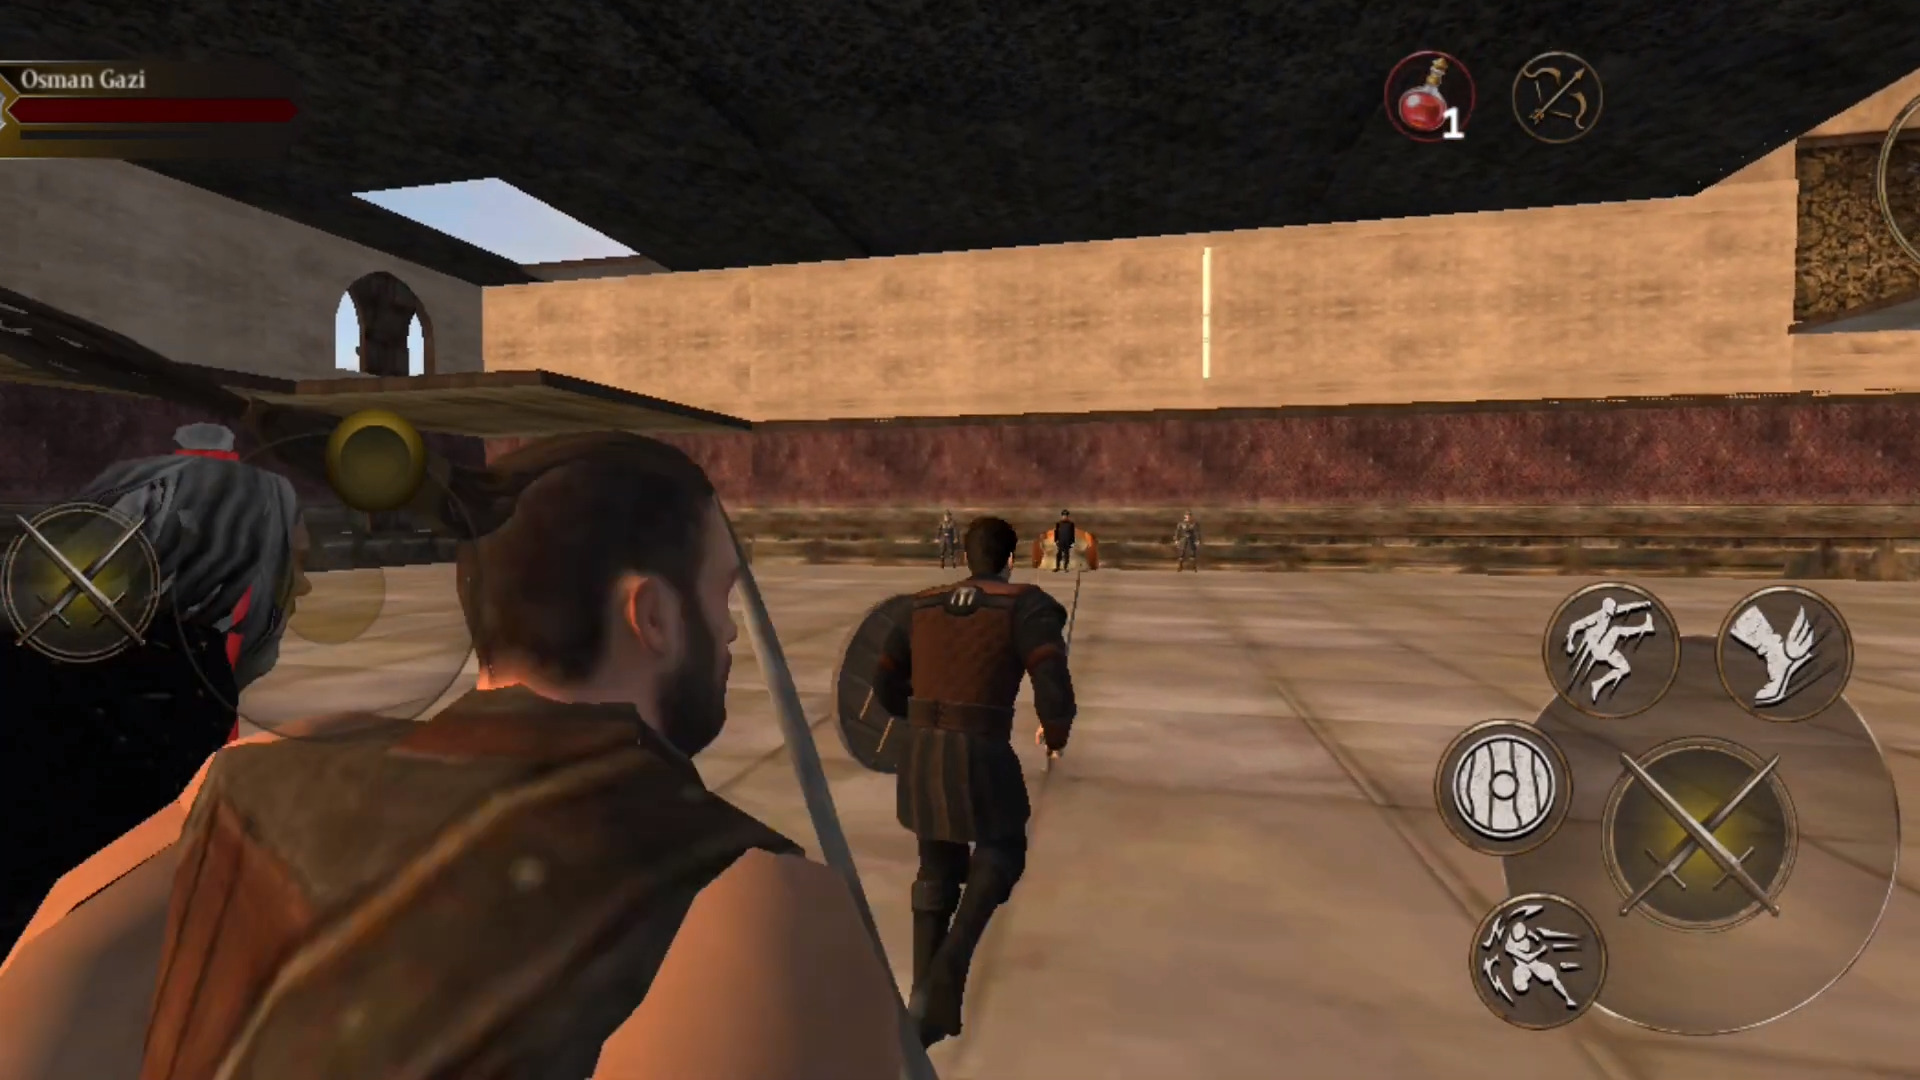 Osman Gazi - Android game screenshots.